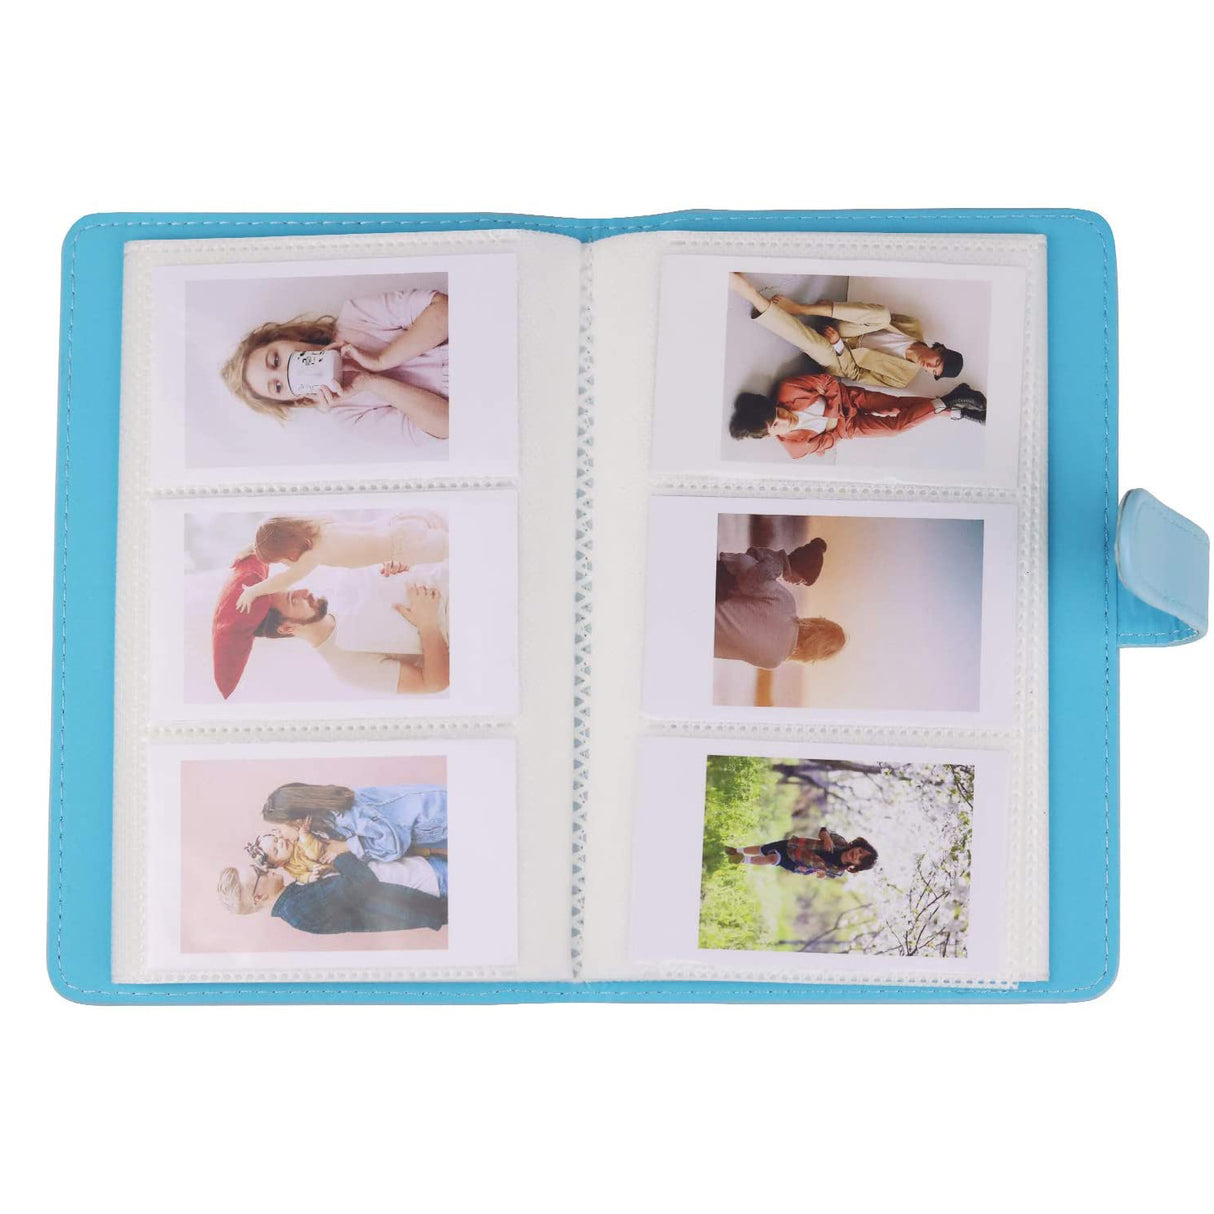 Fujifilm Instax Mini 2 Pack 10 Sheets Instant Film with 96-sheet Album for mini film